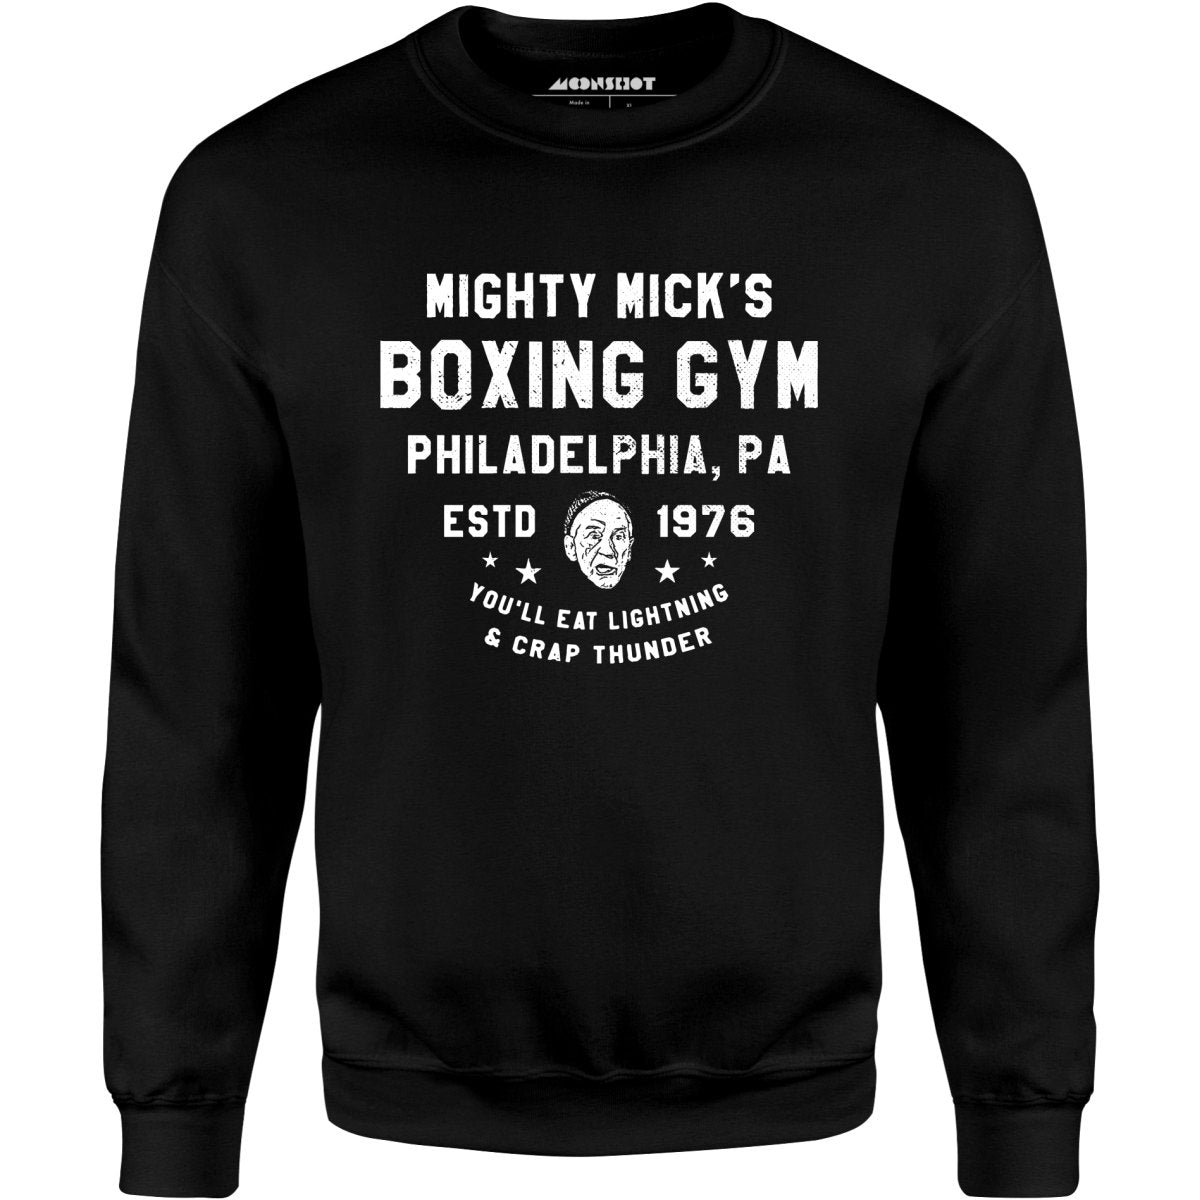 Mighty Mick's Boxing Gym - Unisex Sweatshirt